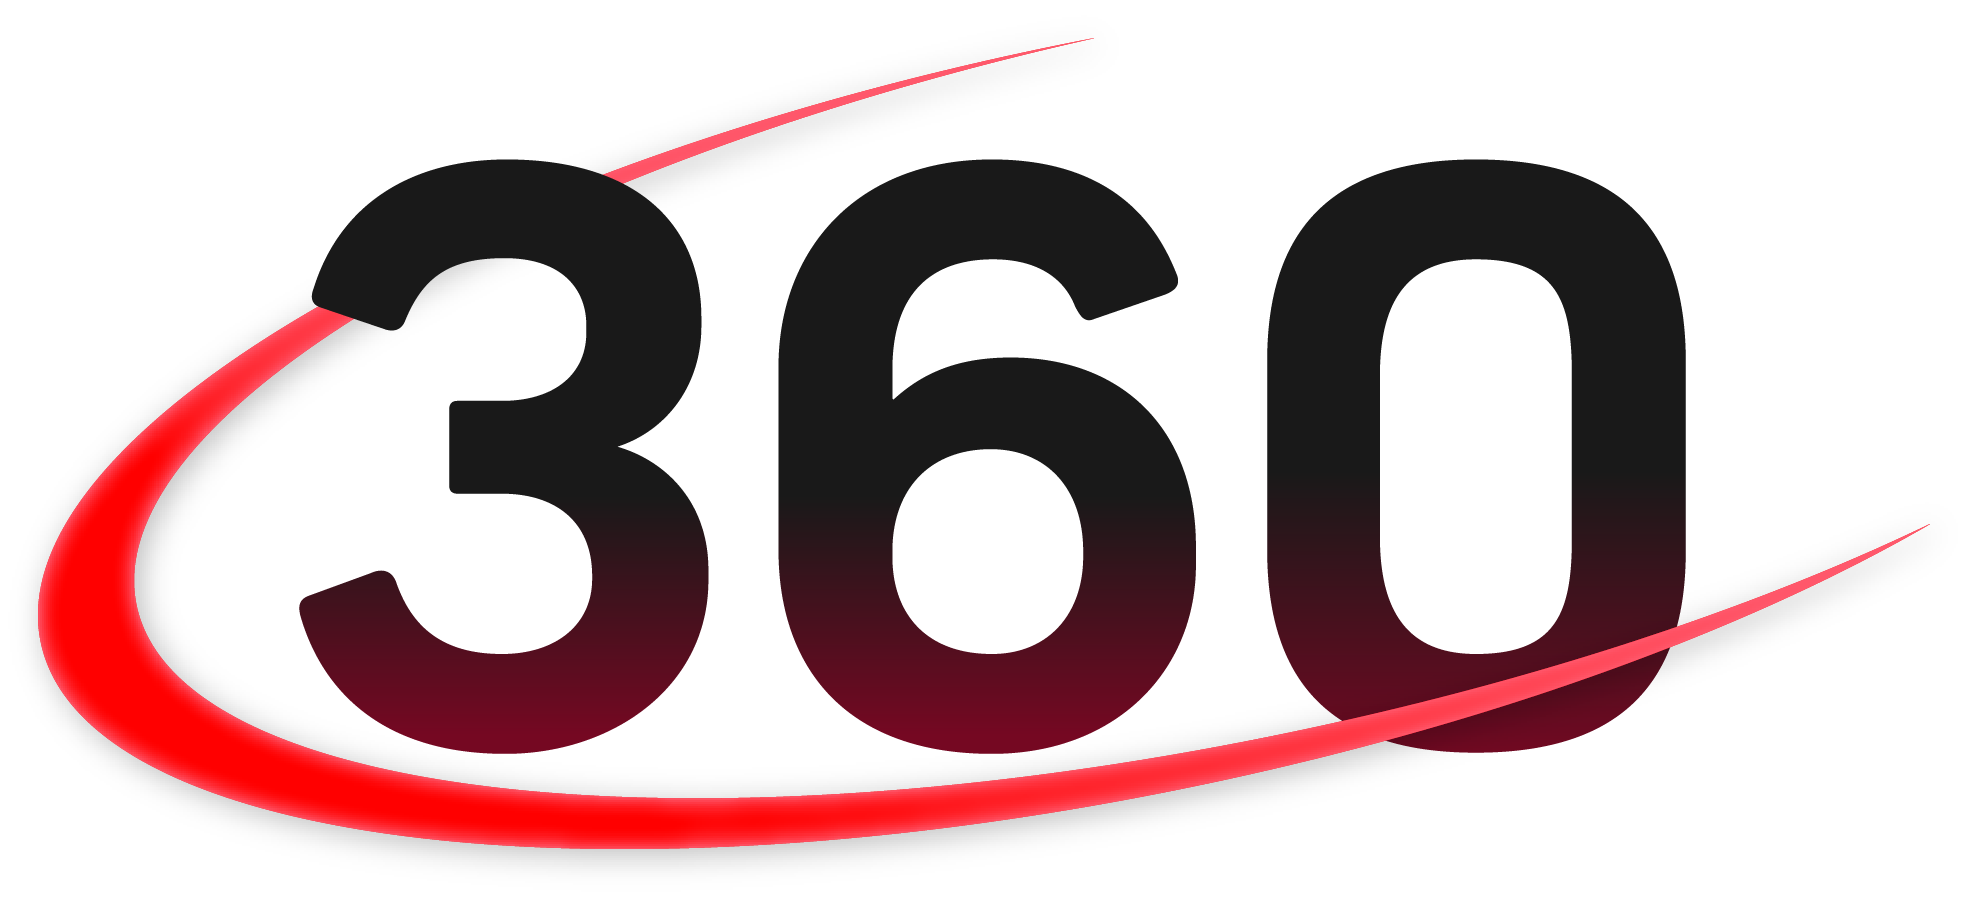 Канал пд. Телеканал 360. 360 Логотип. Канал 360 эмблема. 360 Новости логотип.